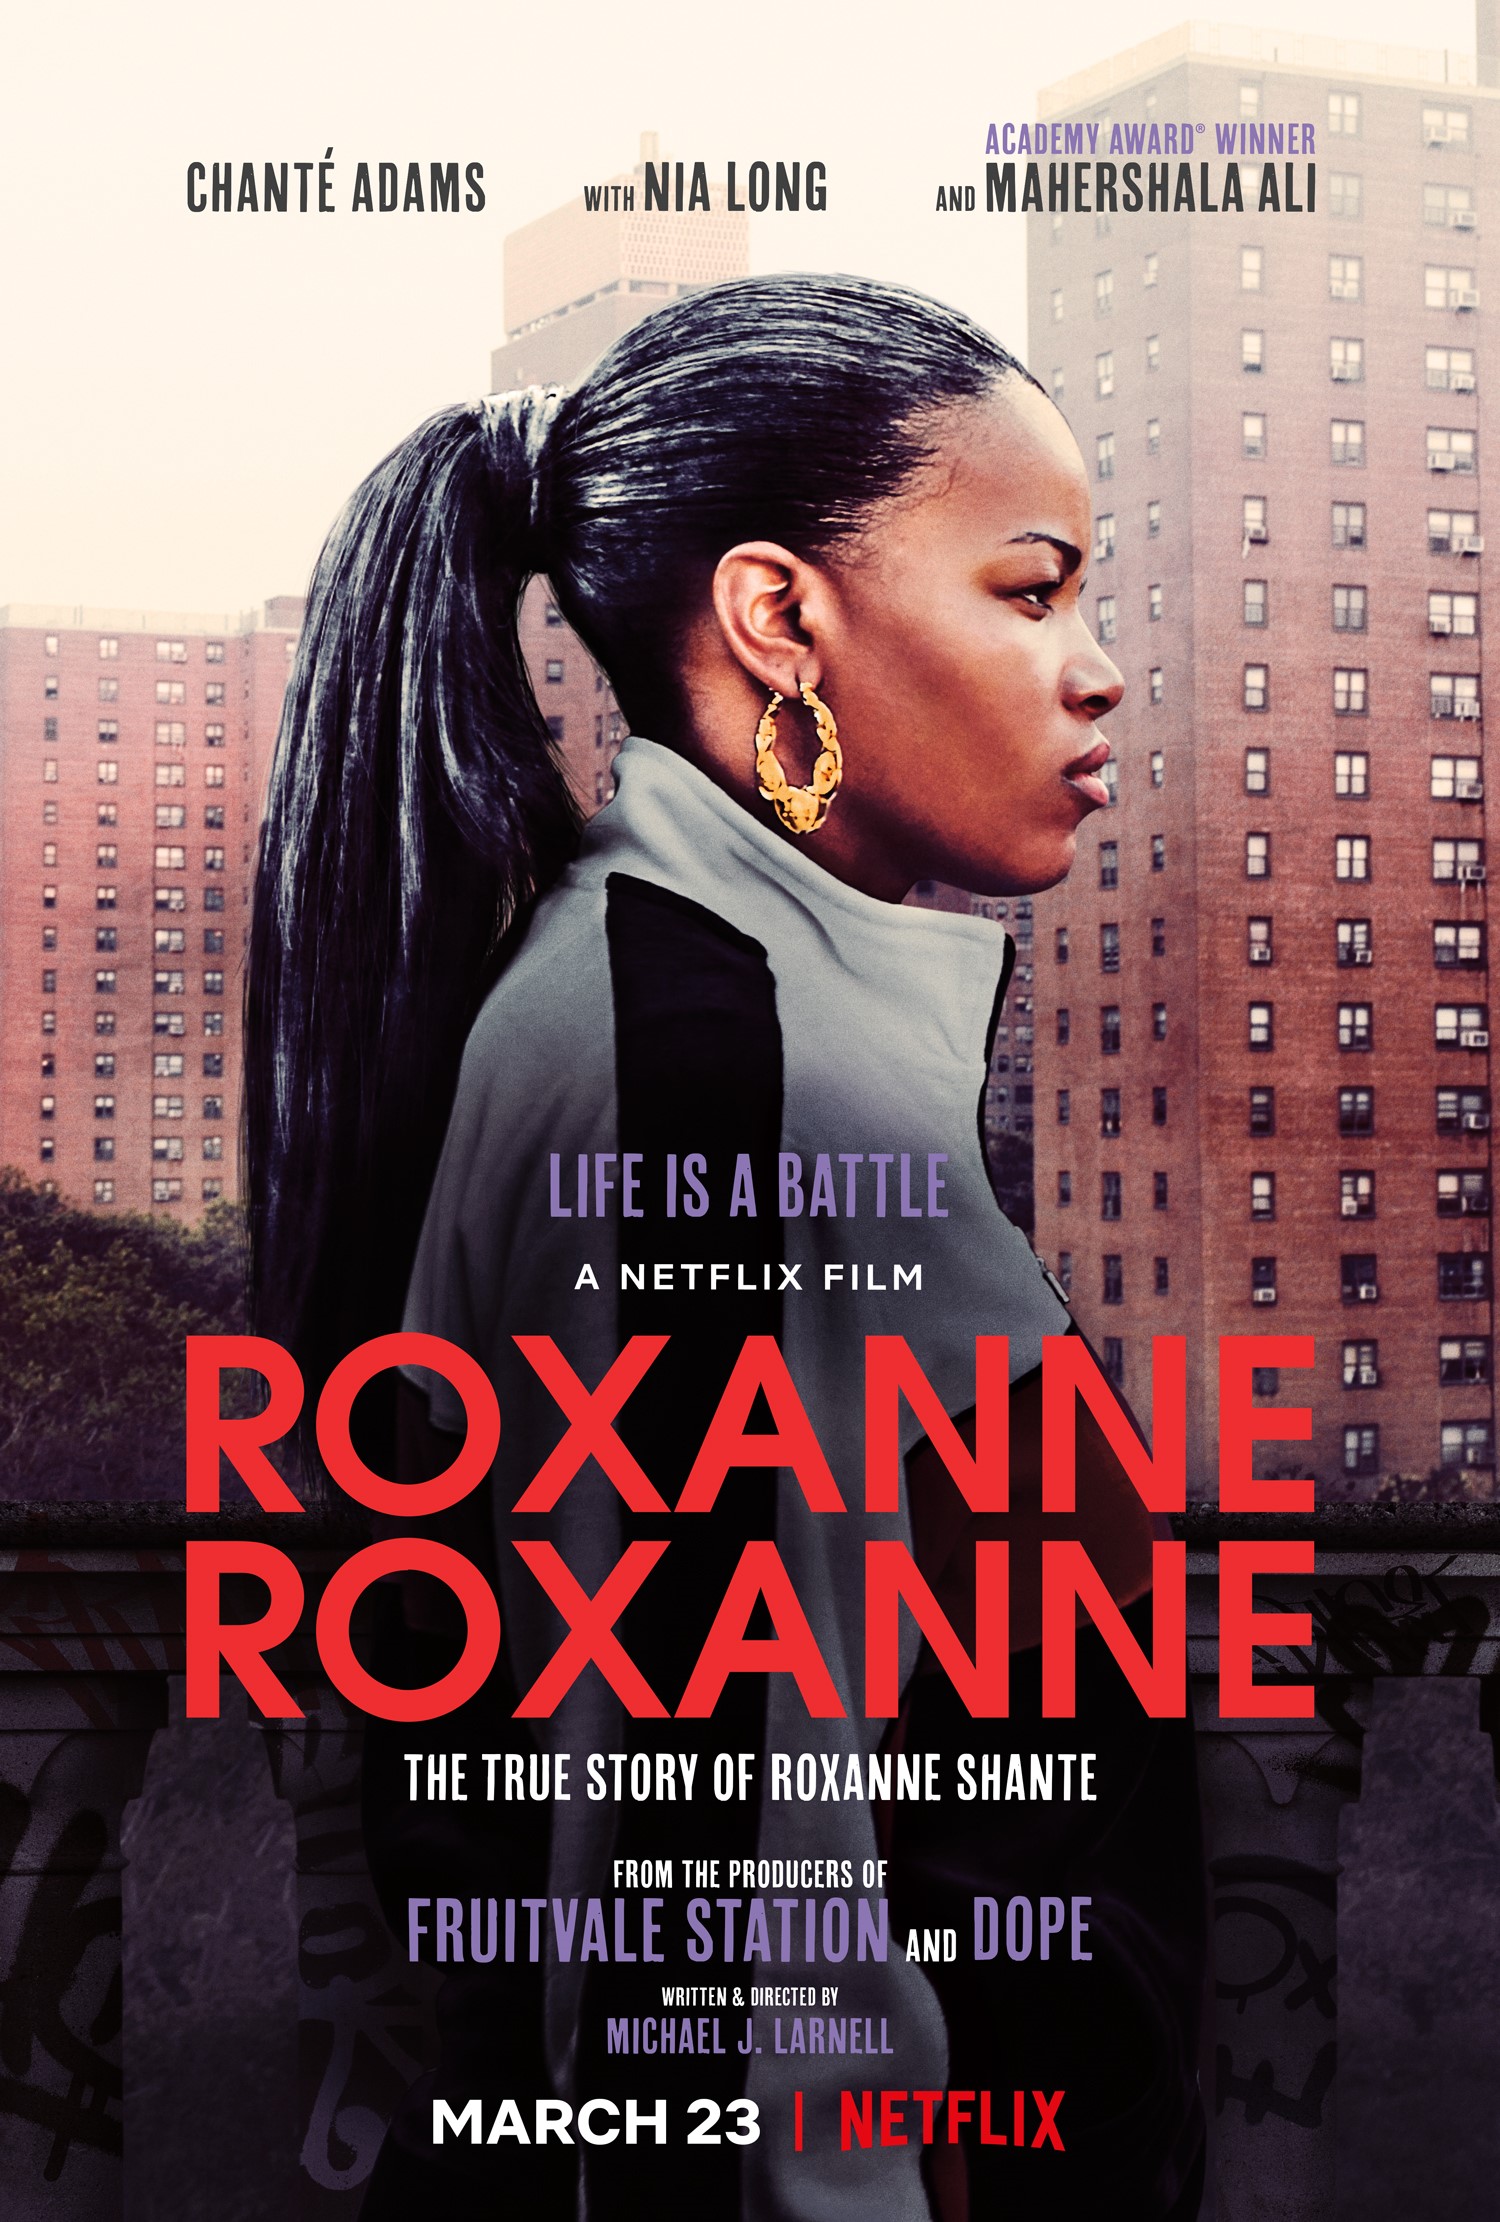 Roxanne Roxanne, Roxanne Shante, Hip Hop, Female Rapper, Queen of Hip Hop, African American Music, African American Culture, KINDR'D Magazine, KINDR'D, Willoughby Avenue